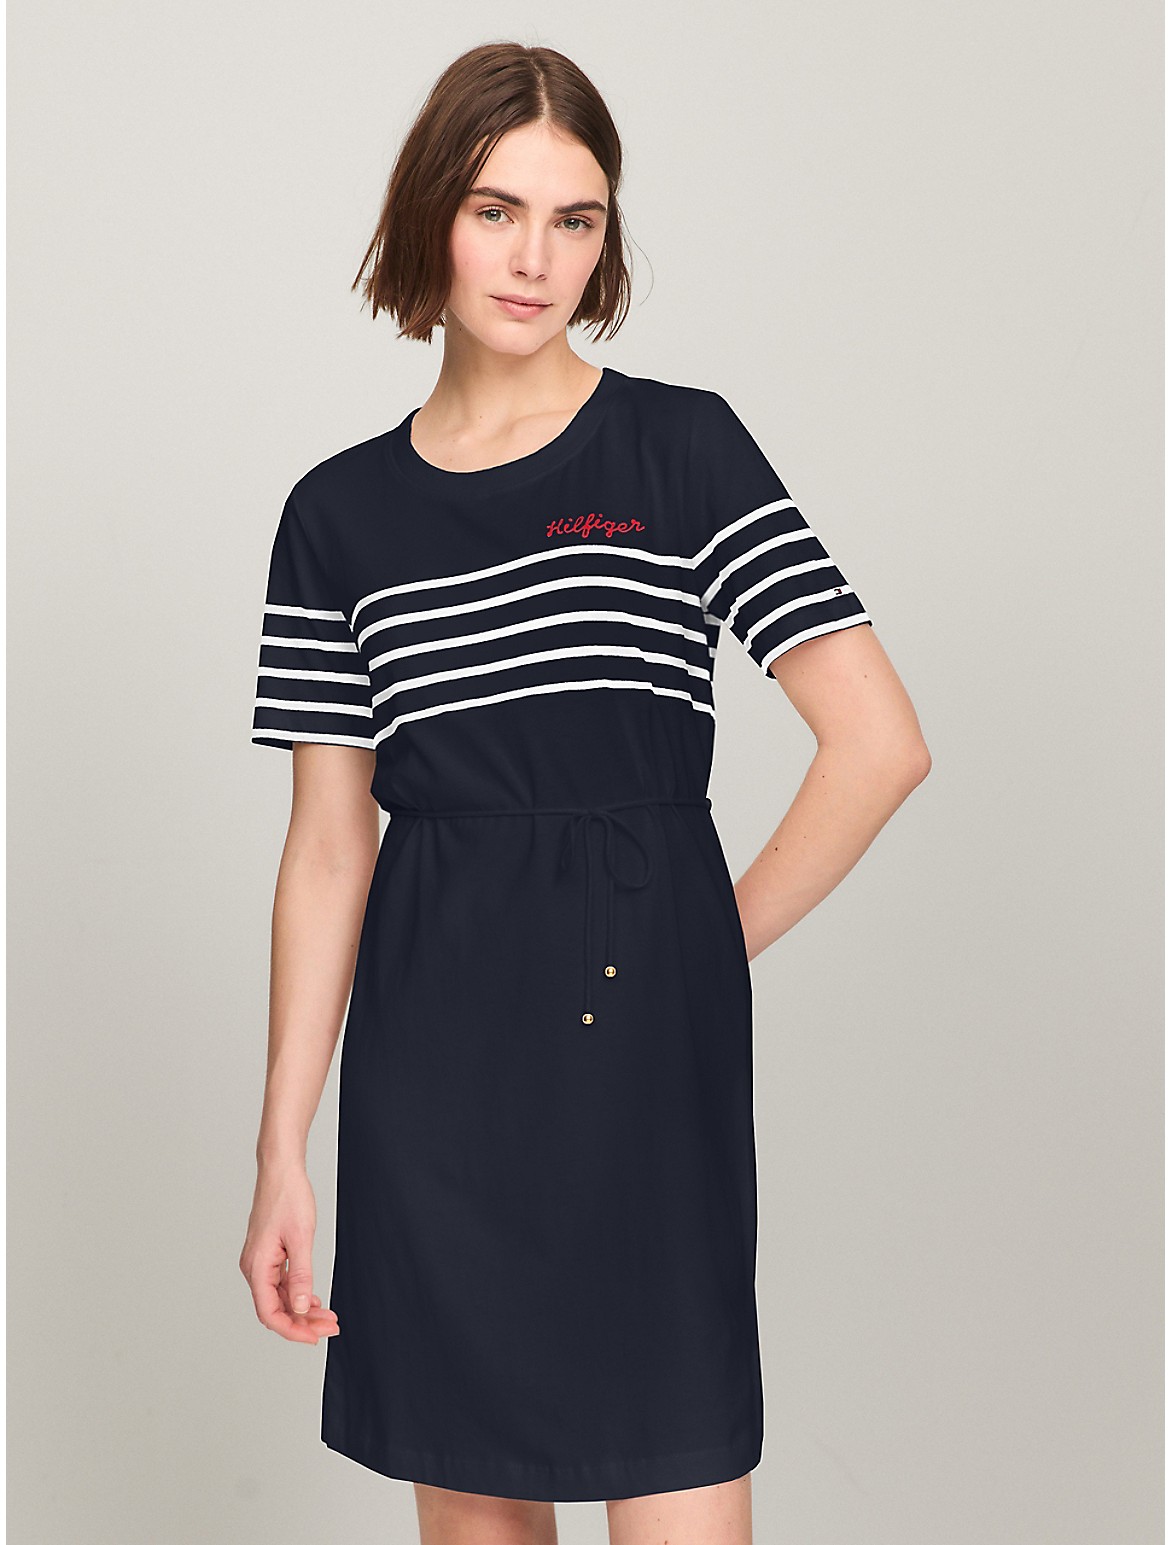 Tommy Hilfiger Women's Hilfiger Stripe Logo T-Shirt Dress